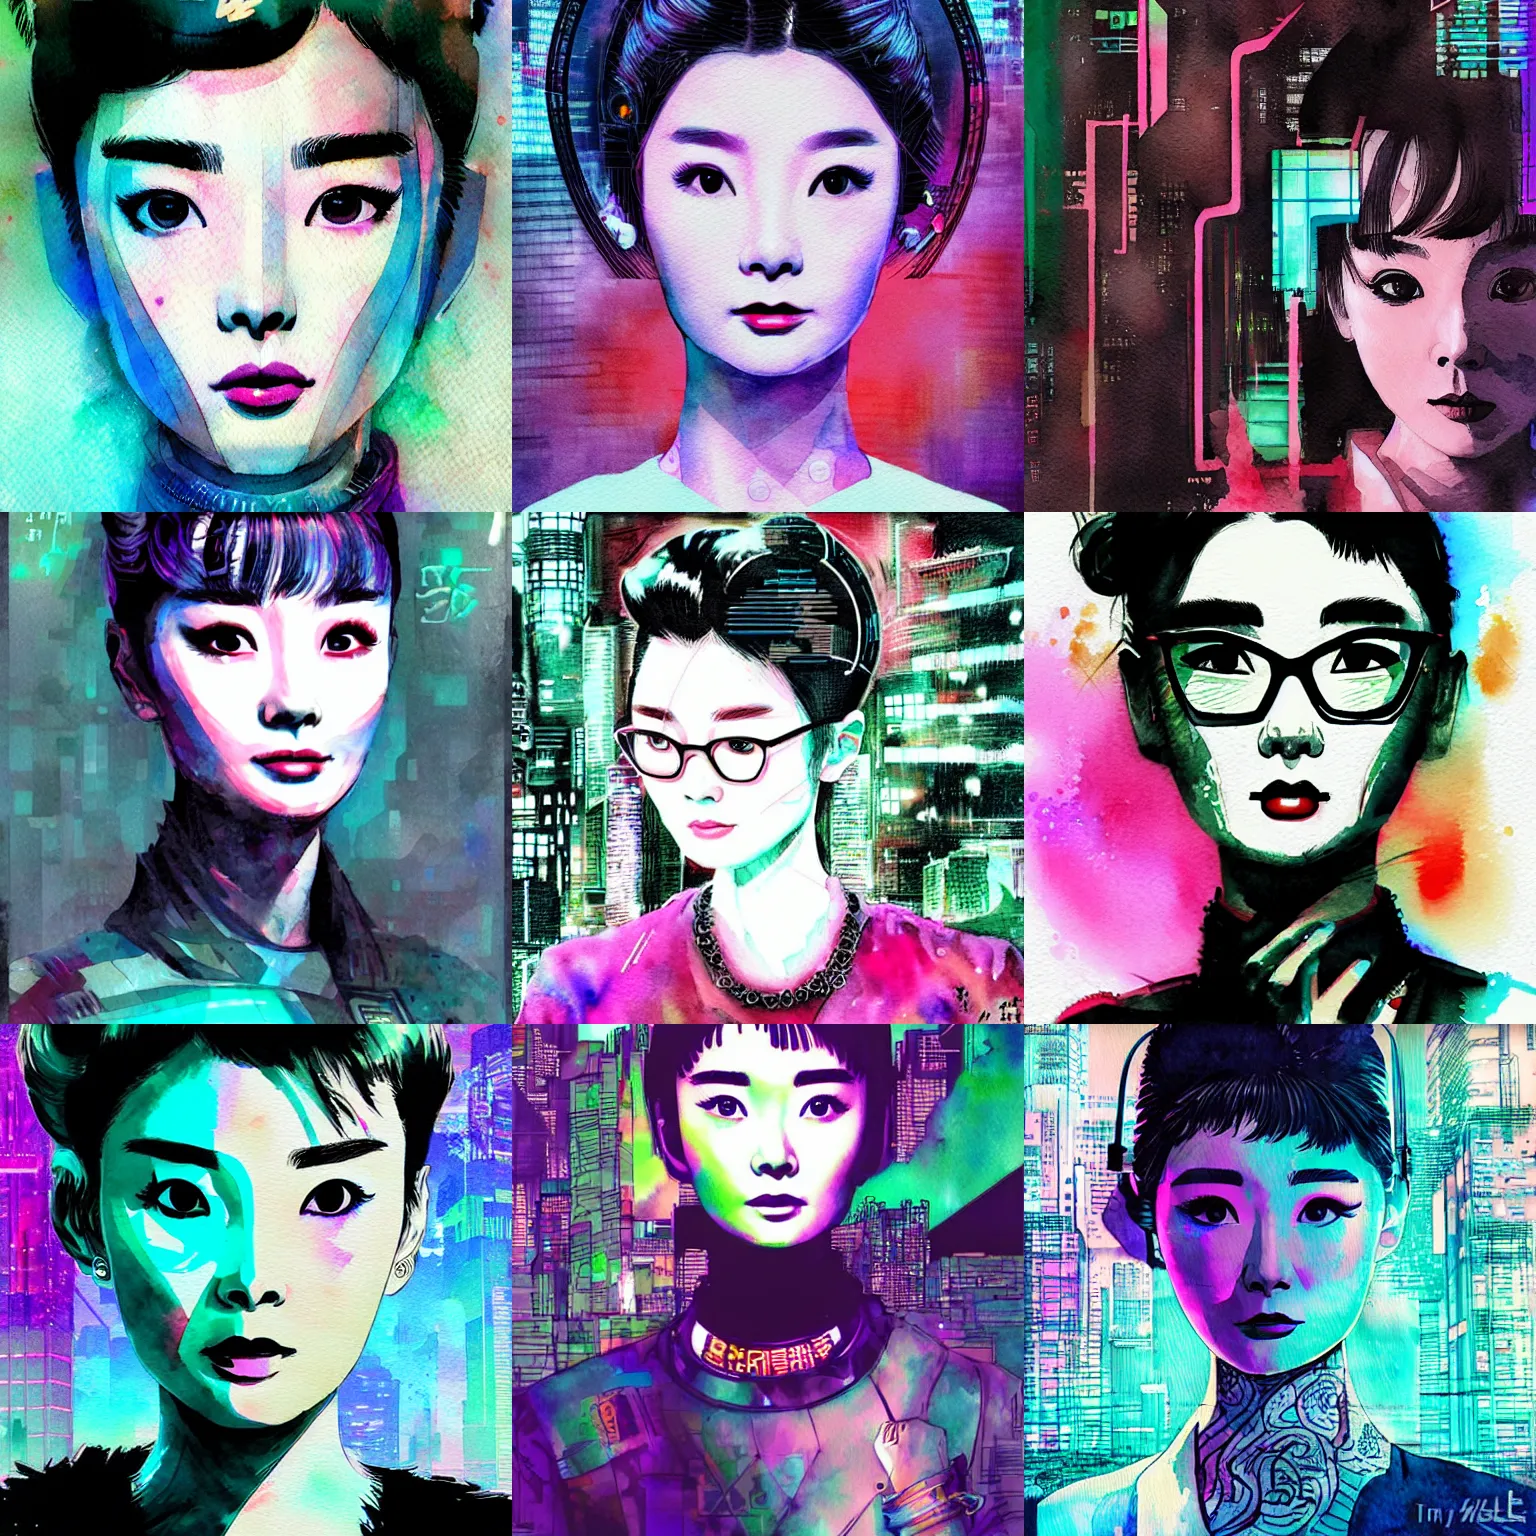 Prompt: korean audrey hepburn, intricate cyberpunk watercolor vaporwave portrait by tim doyle